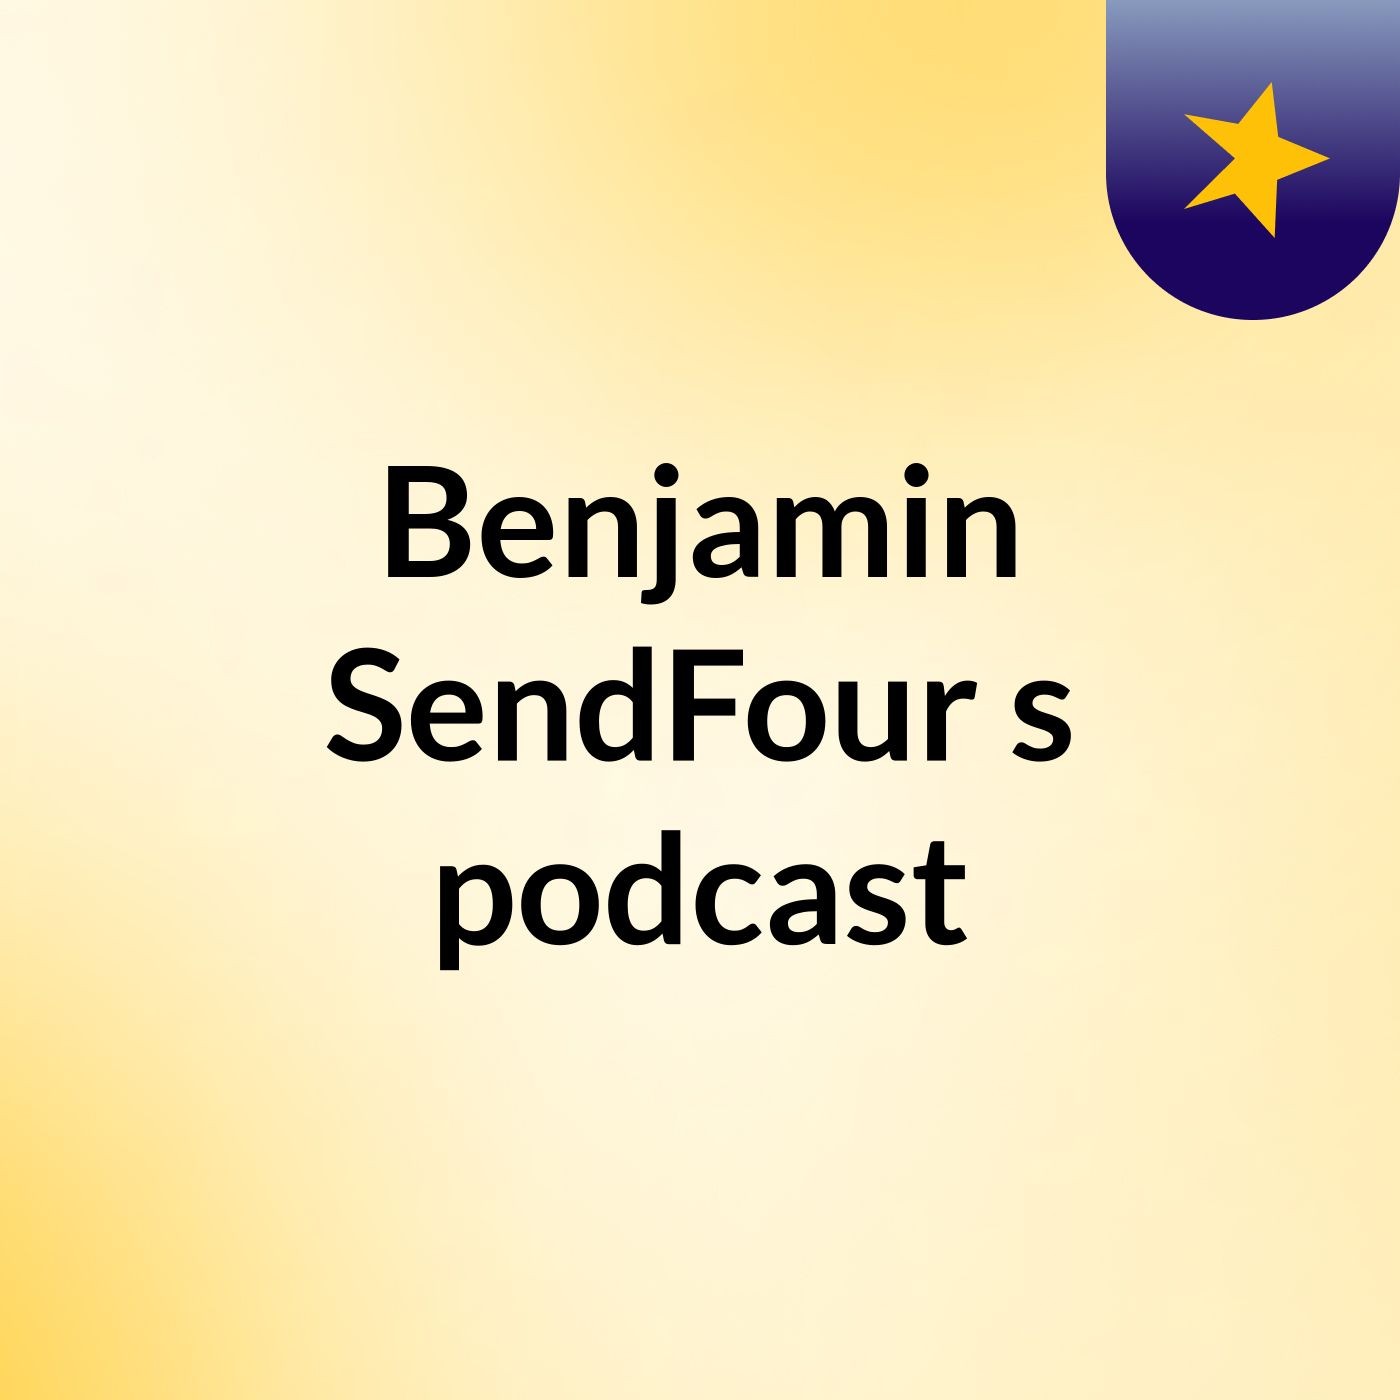 Benjamin SendFour's podcast